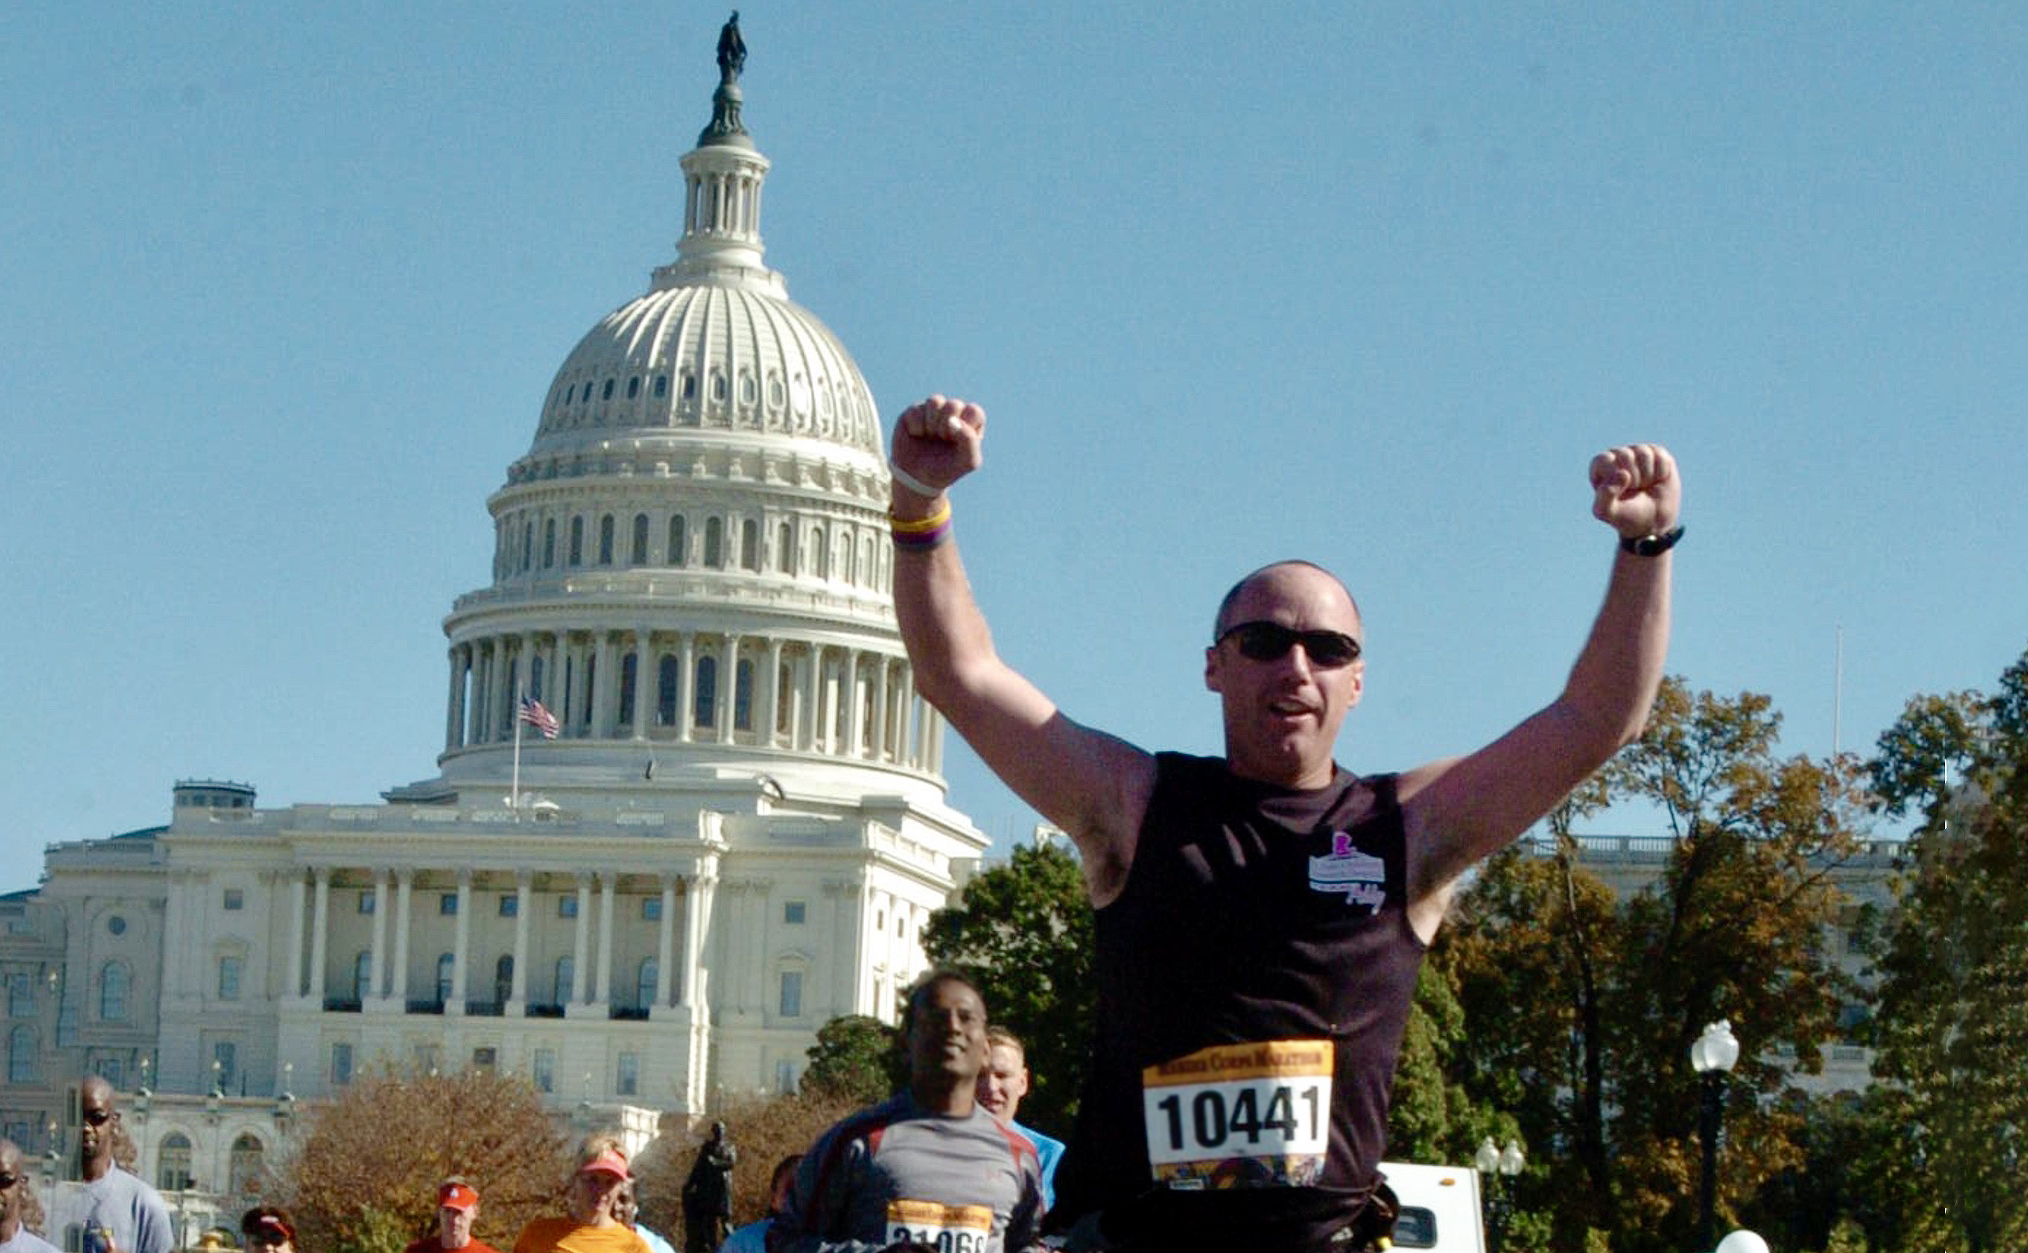 Firefighter's Care Inspires Boston Marathon Run